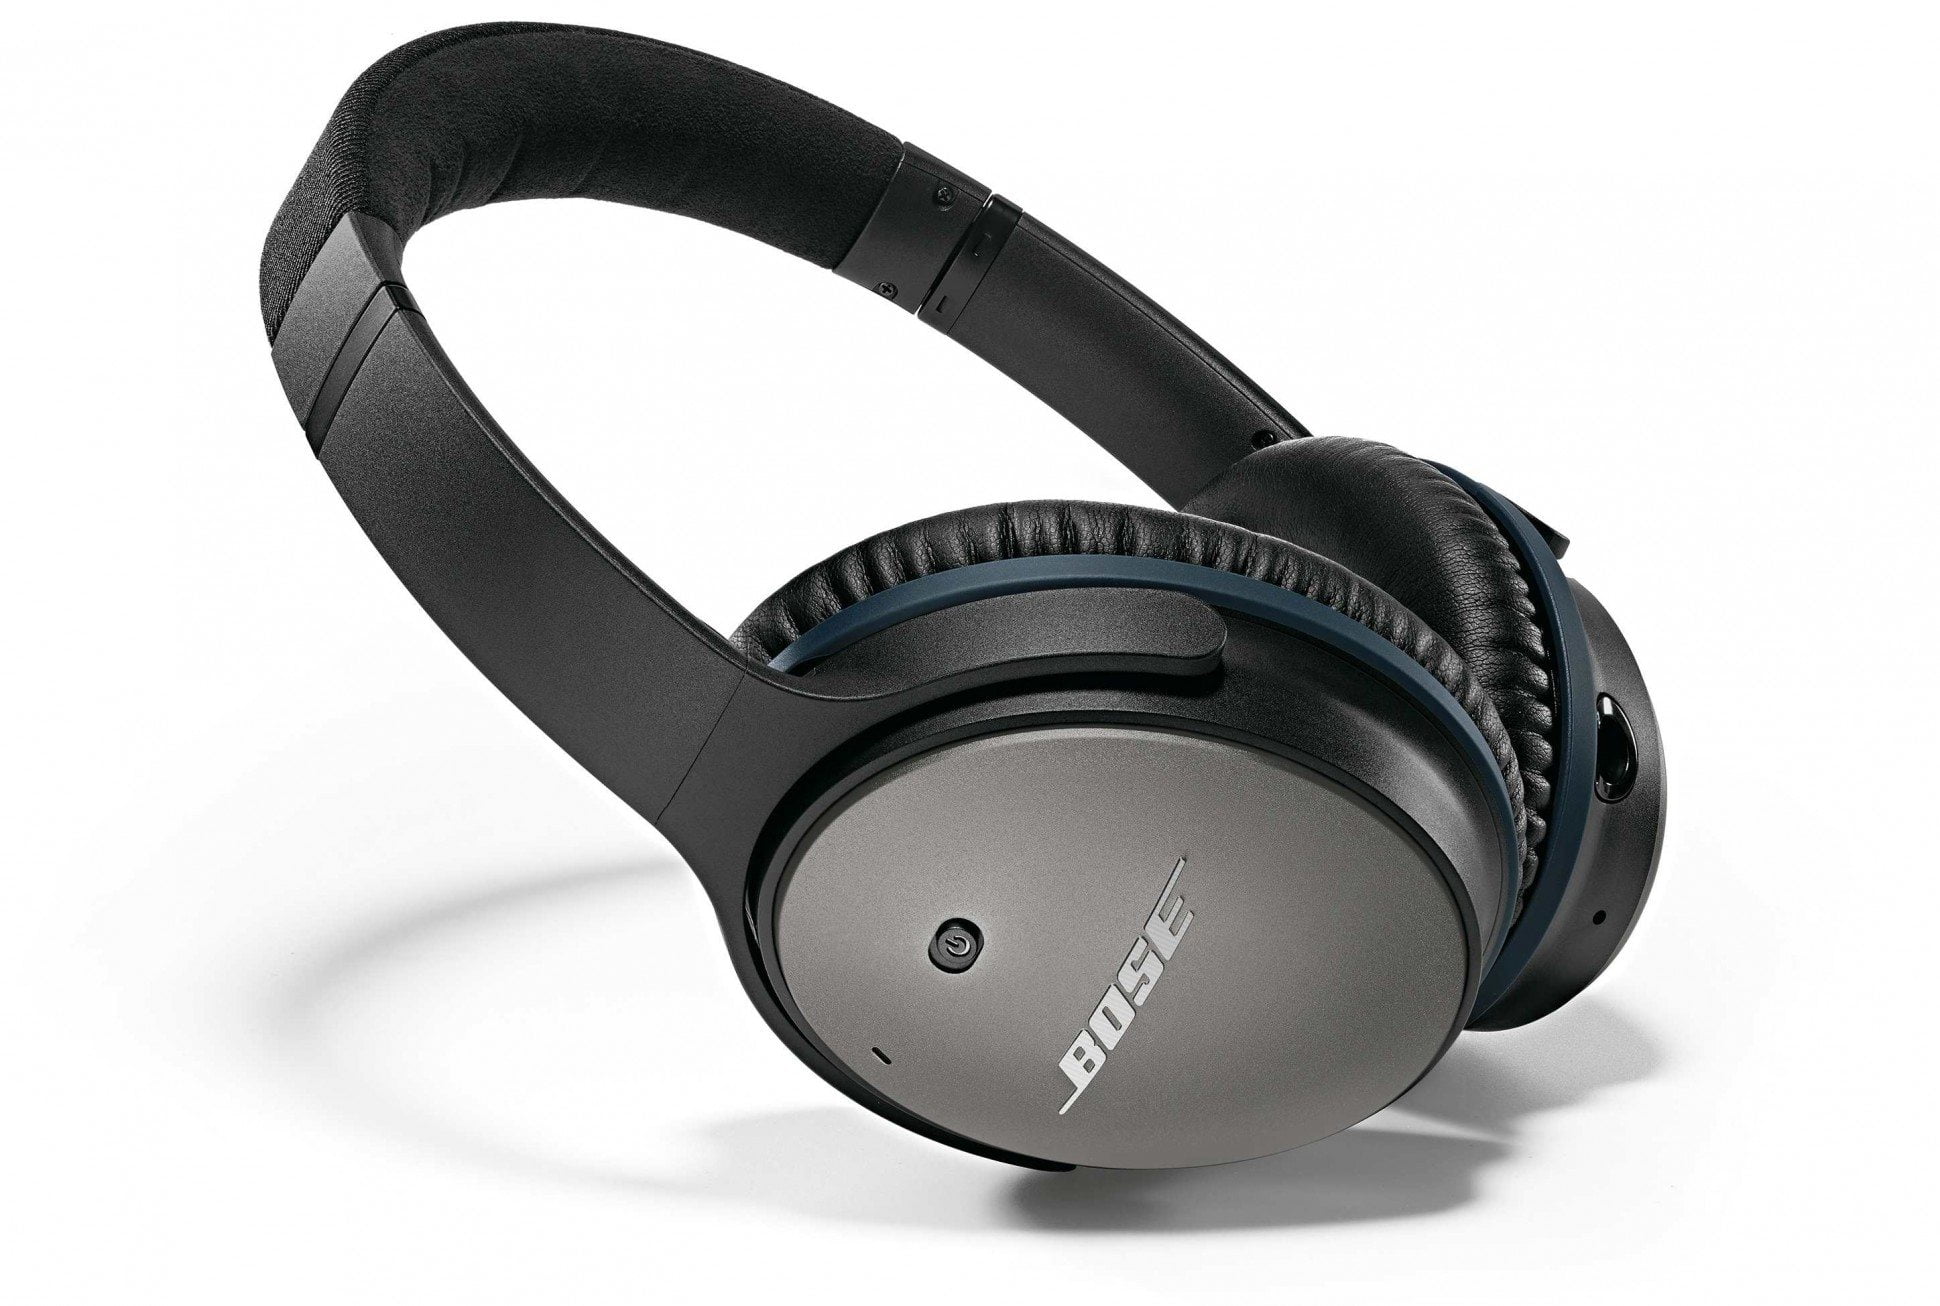 Bose QuietComfort 25 noise canceling headphones